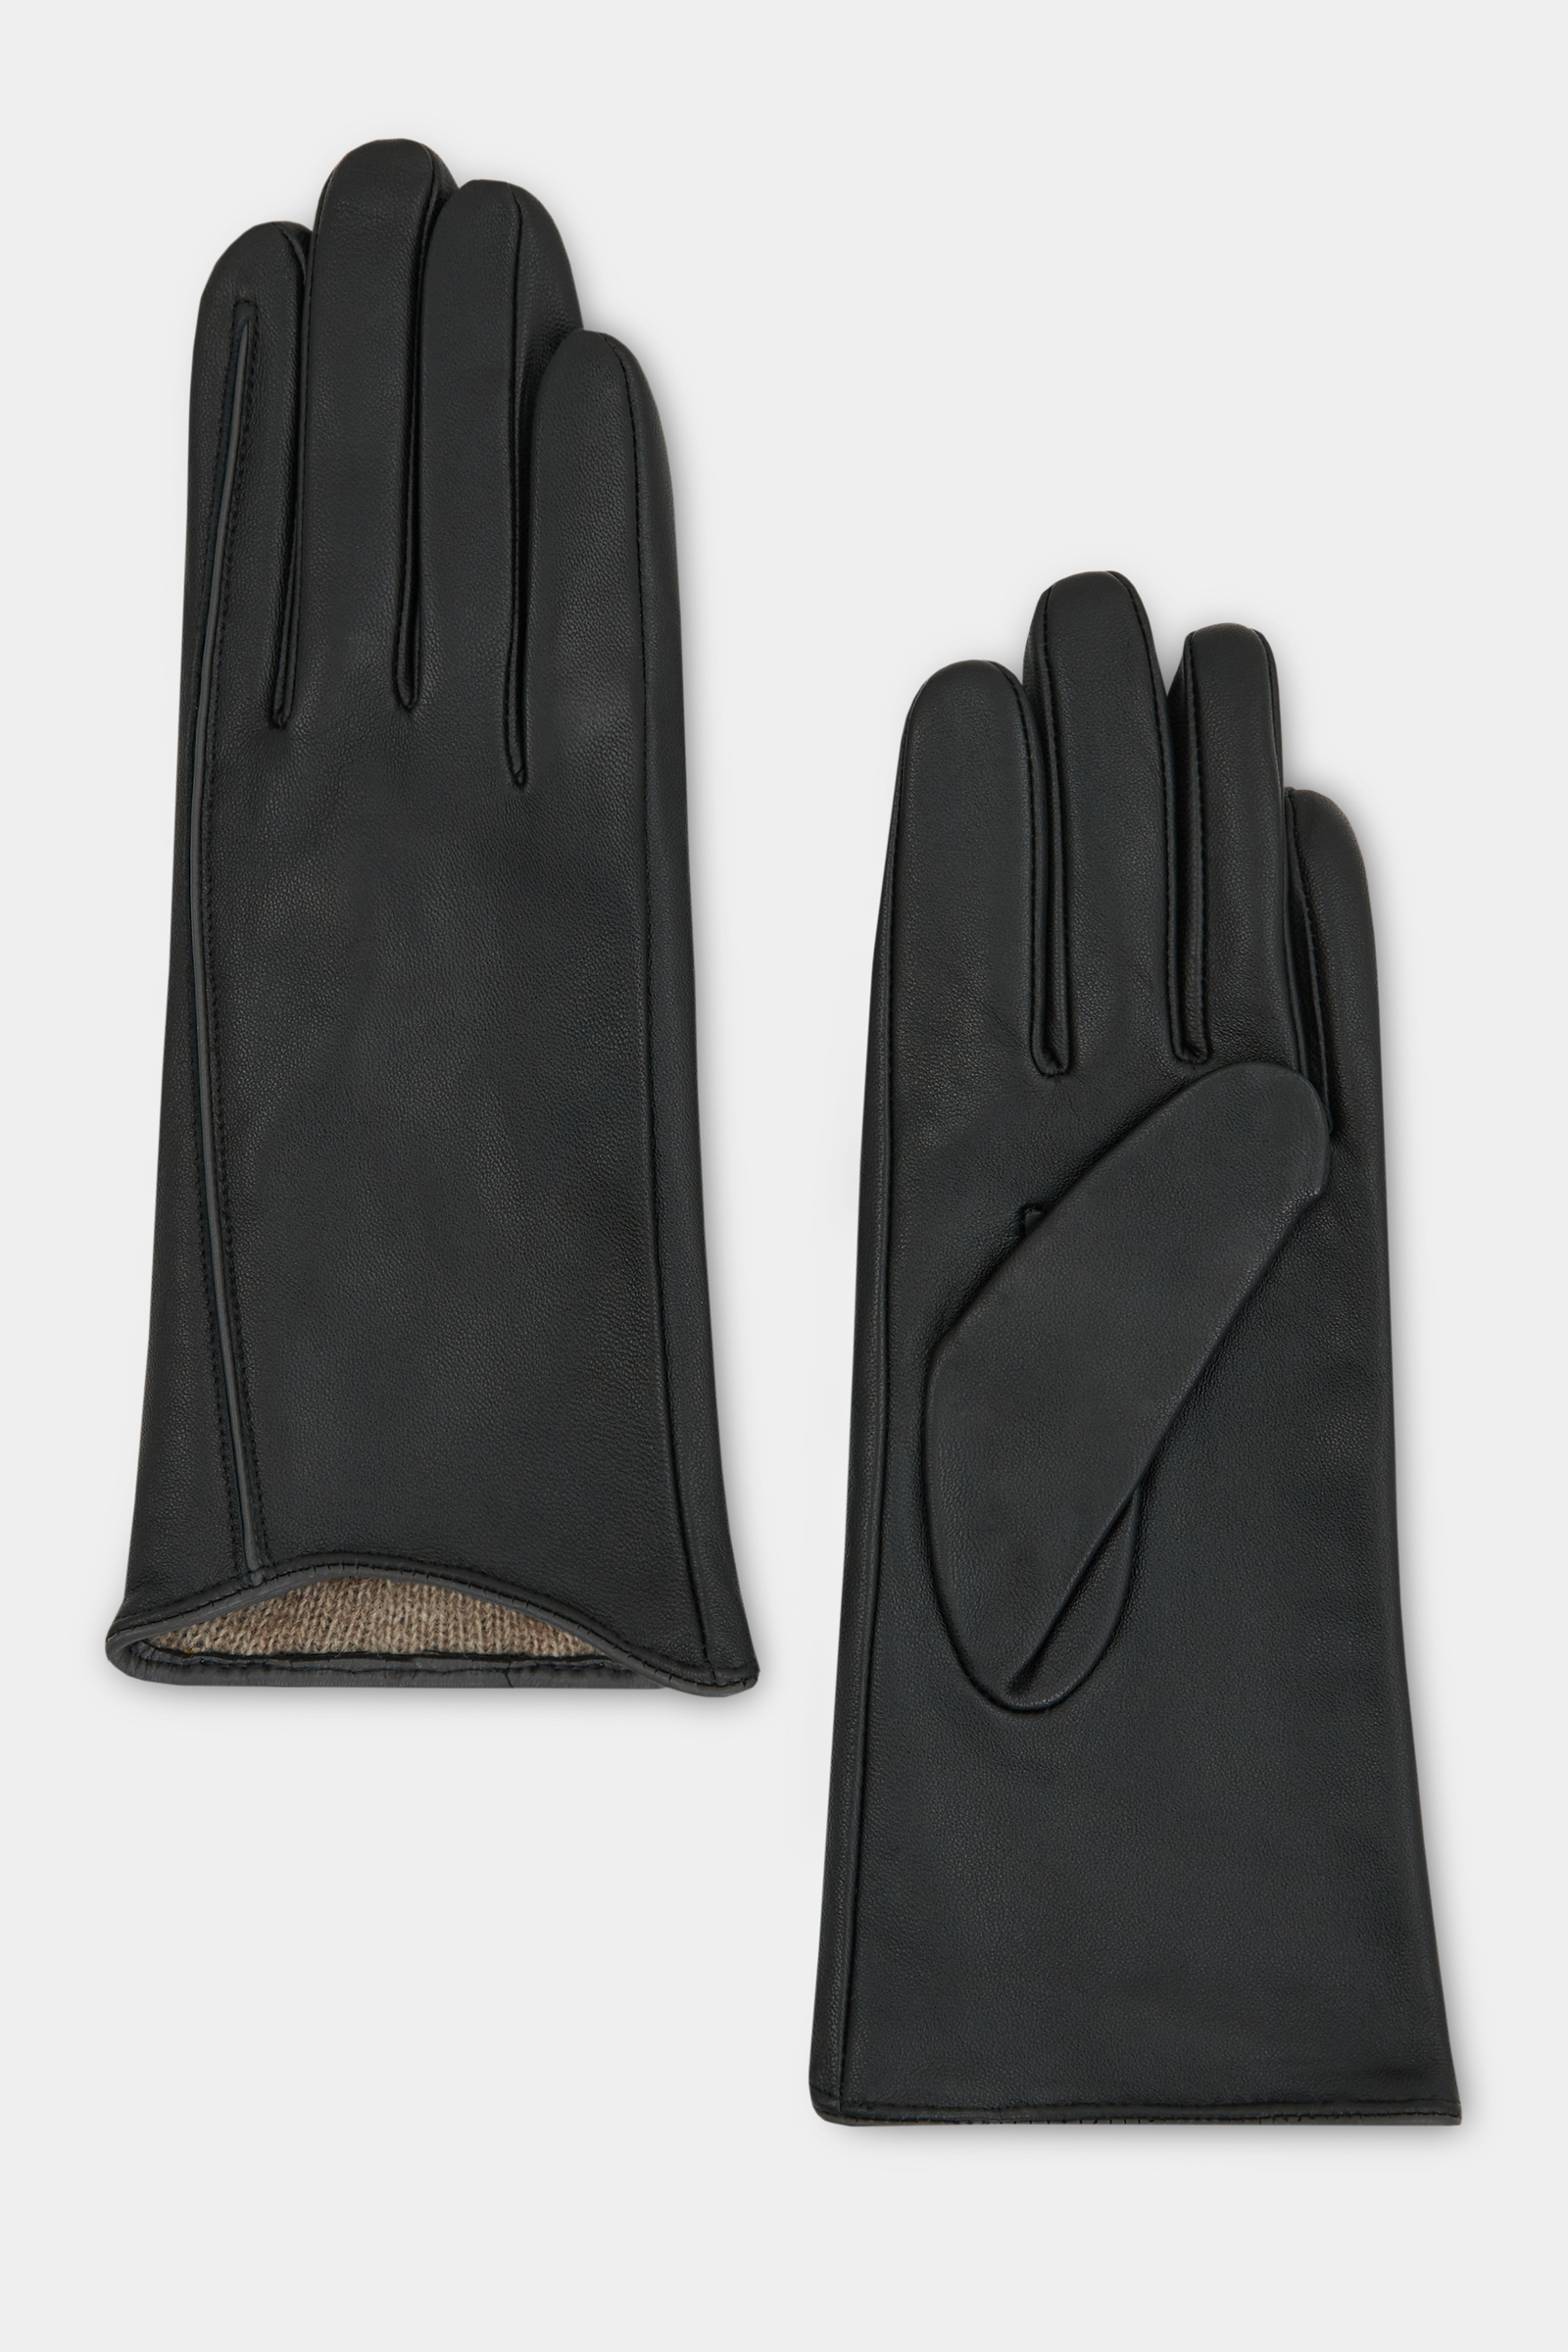 Перчатки женские Finn Flare FAD11307 black, р. 7.5